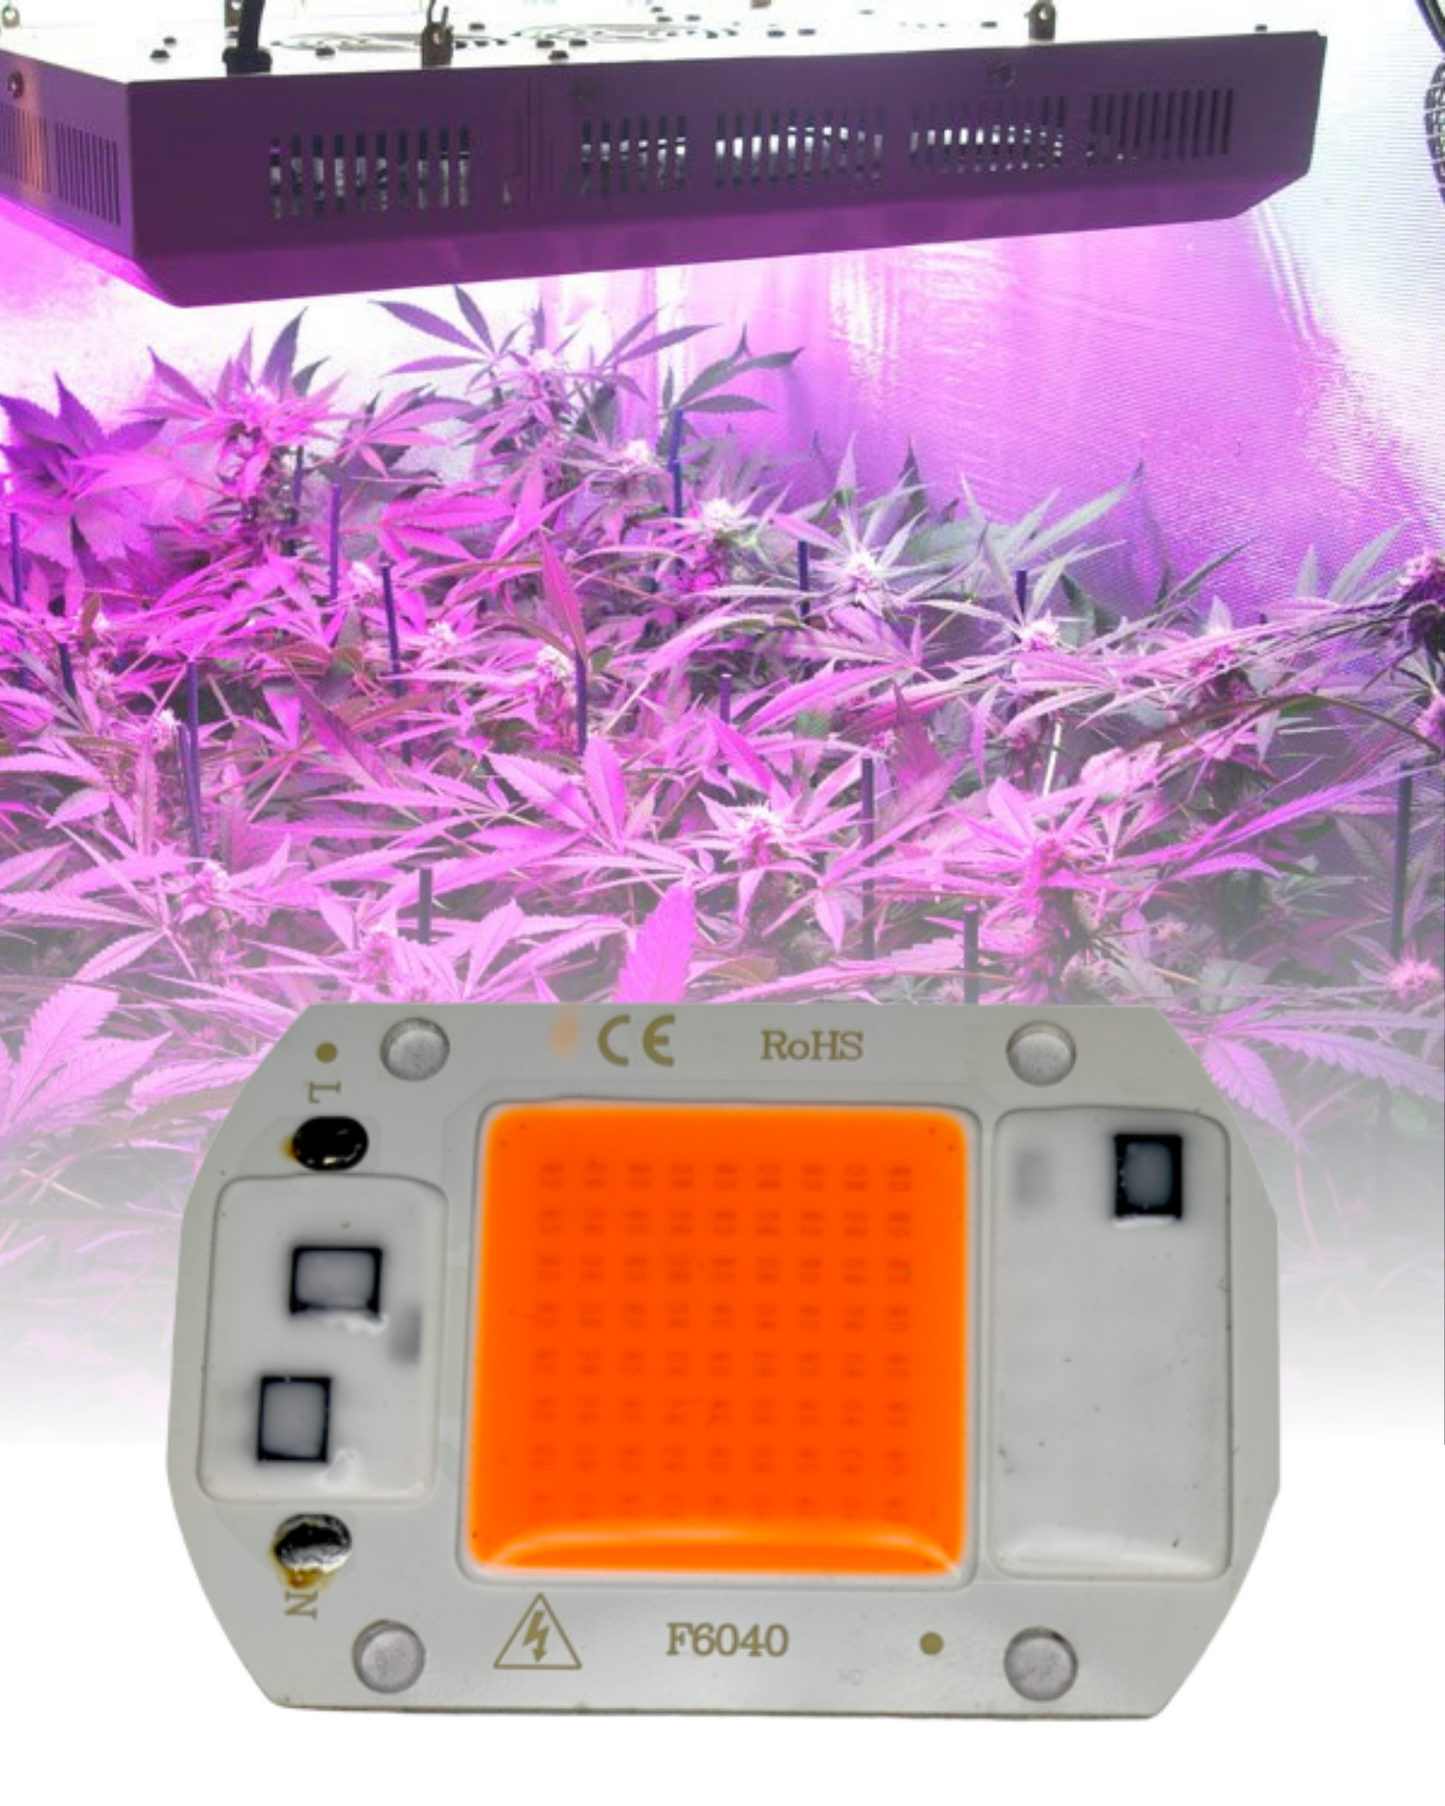 Chip LED de potencia 30W 6040 para Cultivo de plantas | Full spectrum | Espectro completo para invernadero